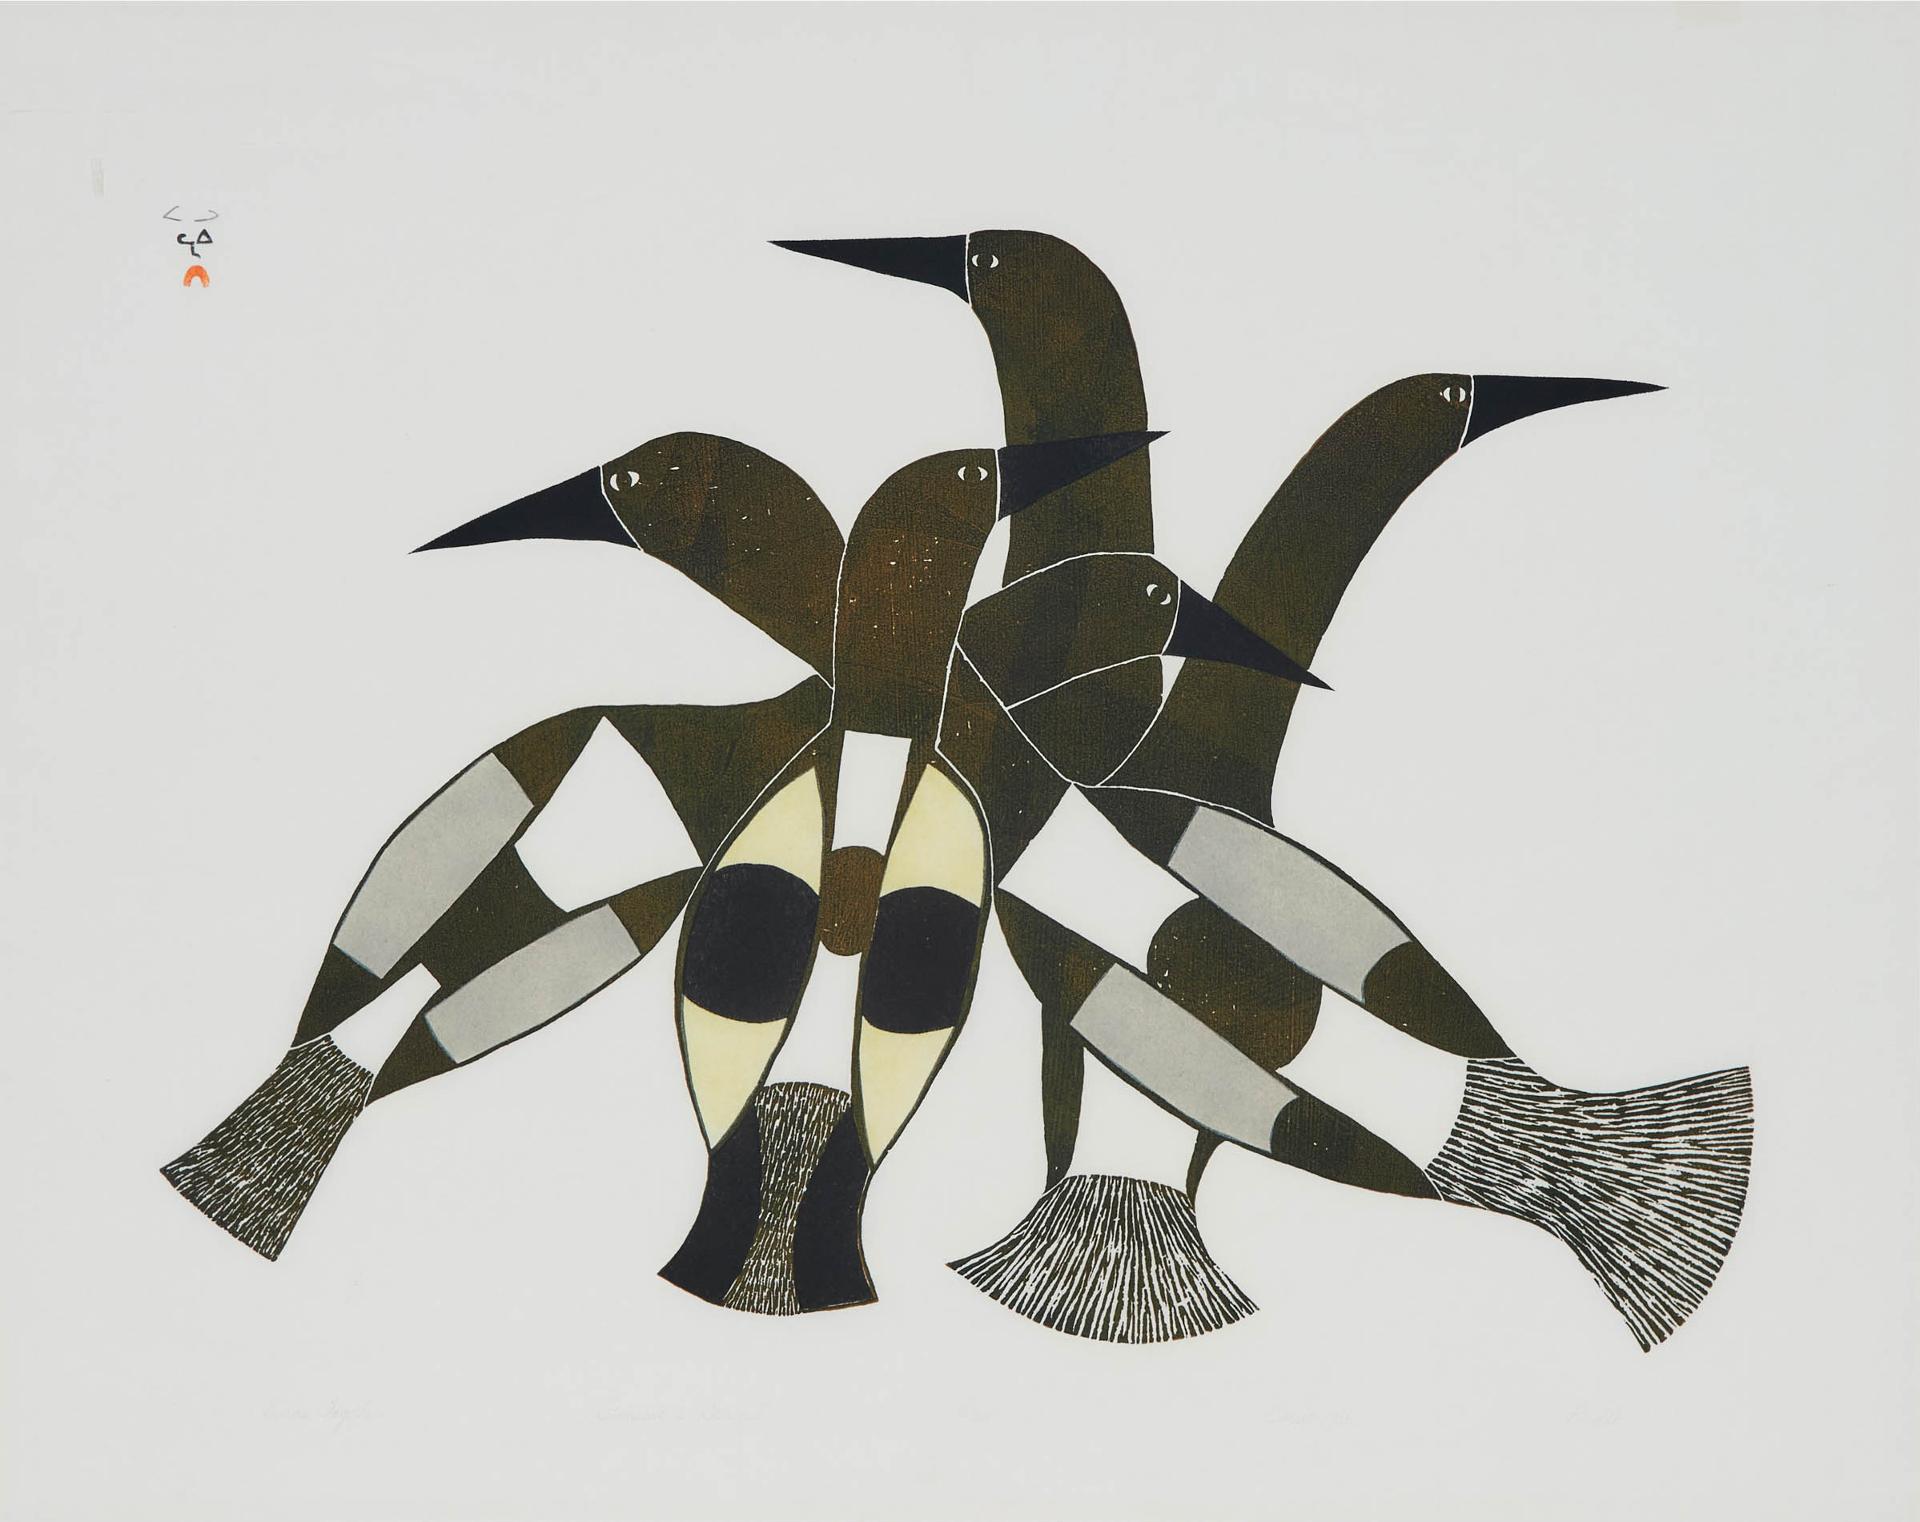 Pudlo Pudlat (1916-1992) - Birds Together, 1986